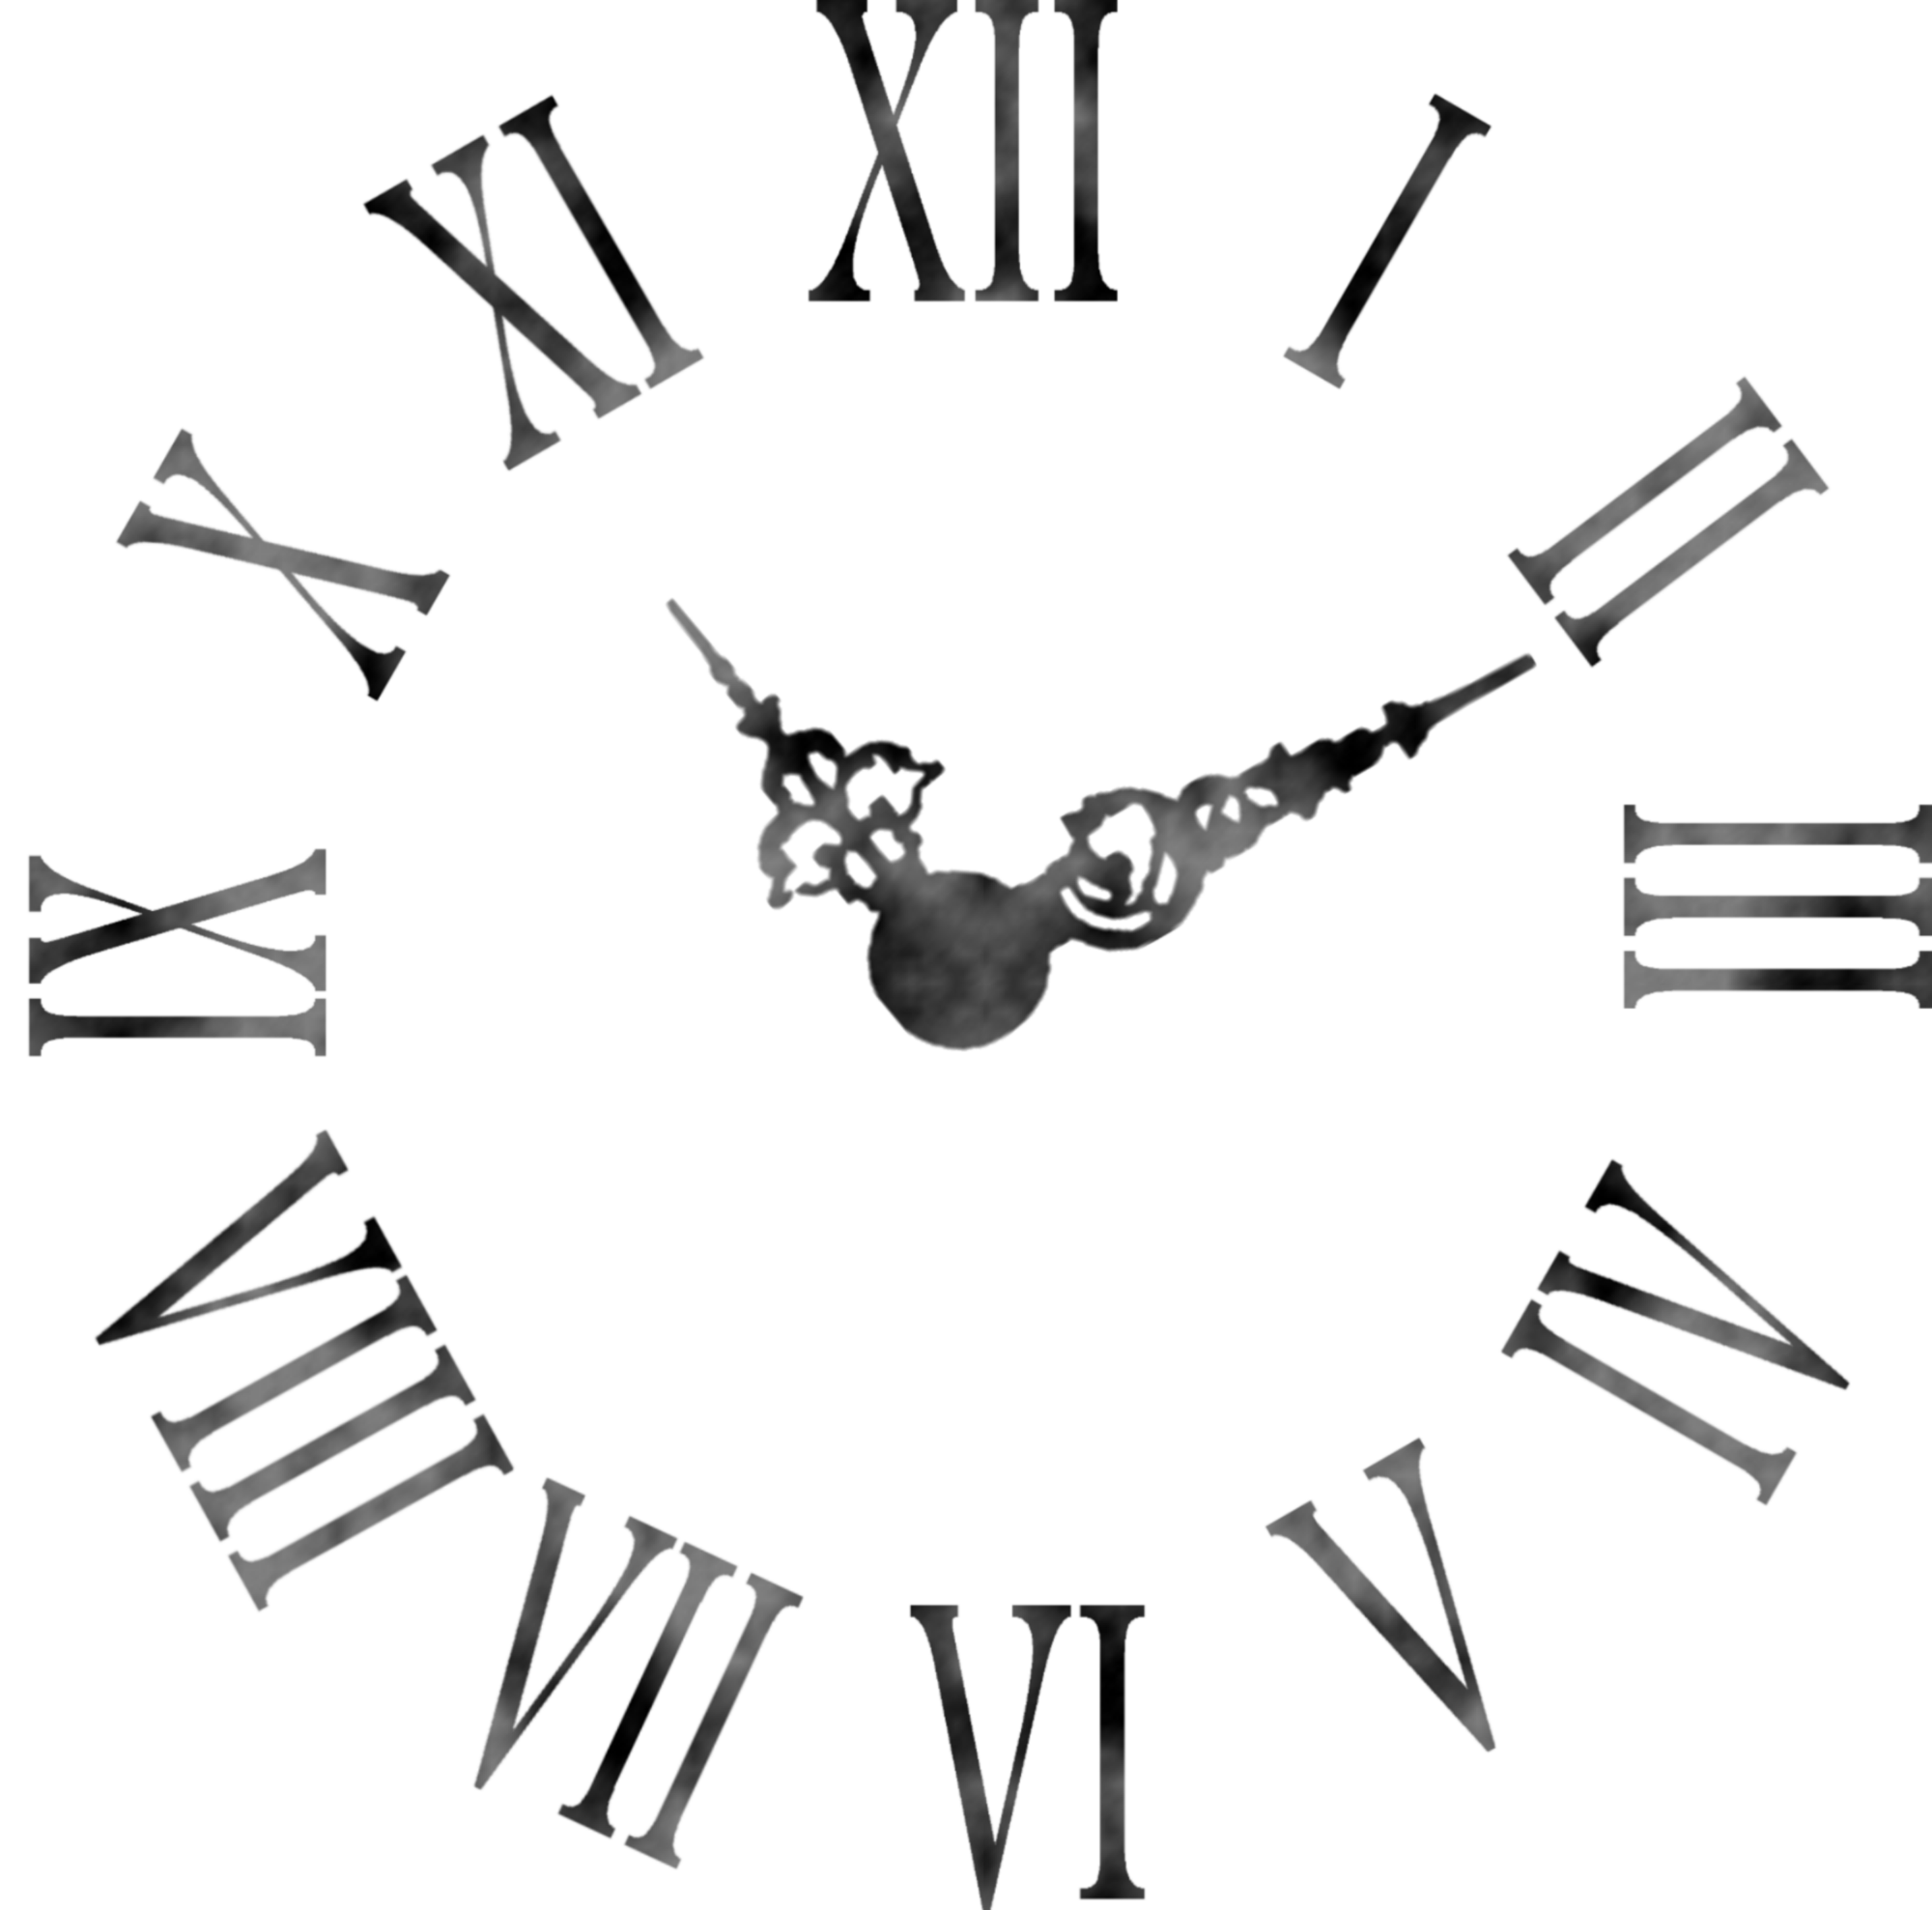 Roman Numeral Clock Clip Art